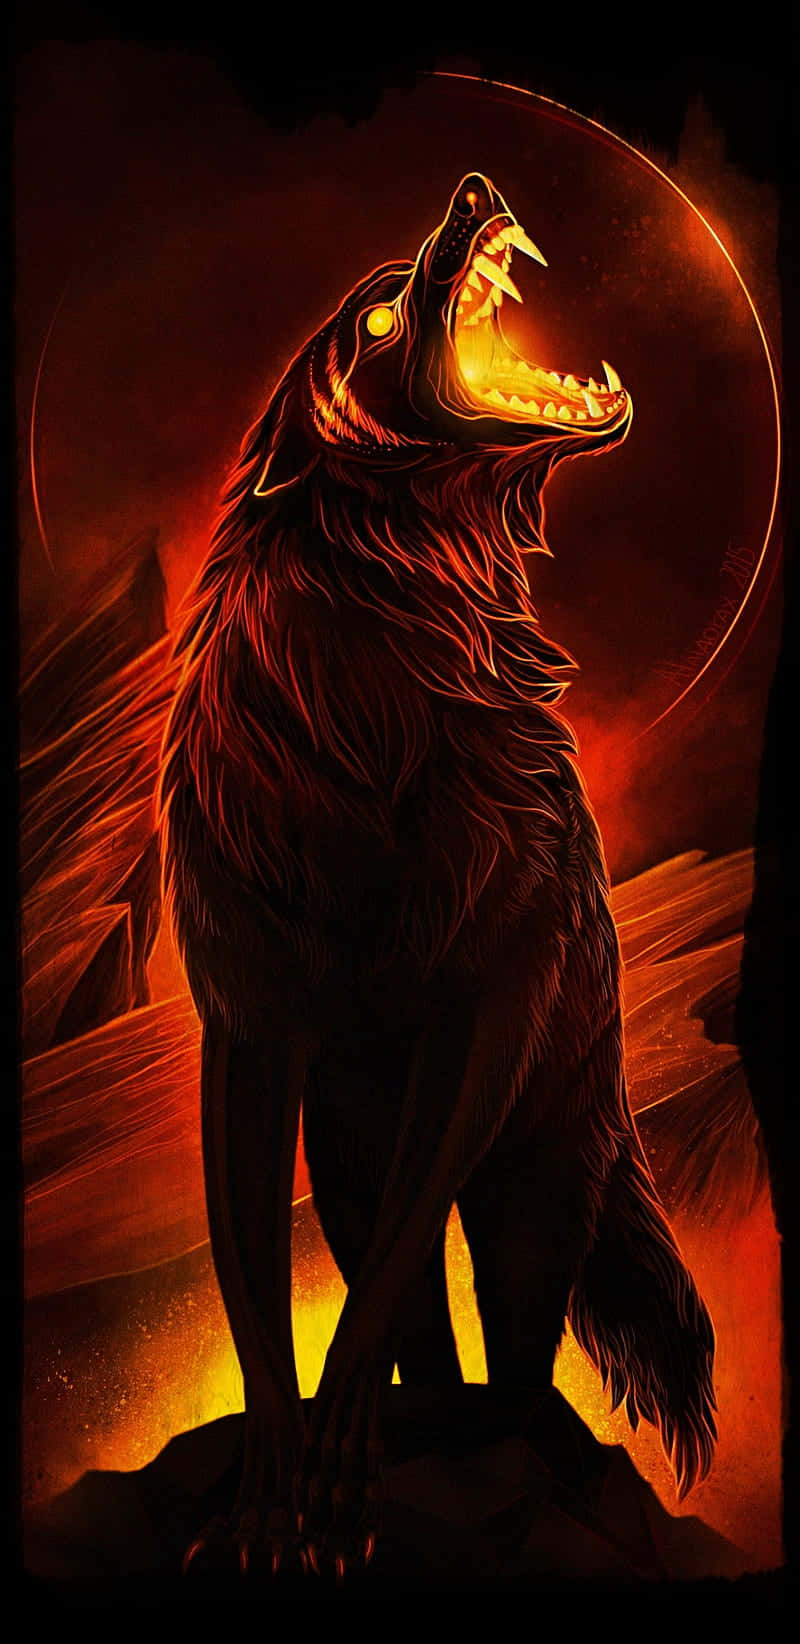 "A fiery wolf stalks the night sky among watery stars." Wallpaper